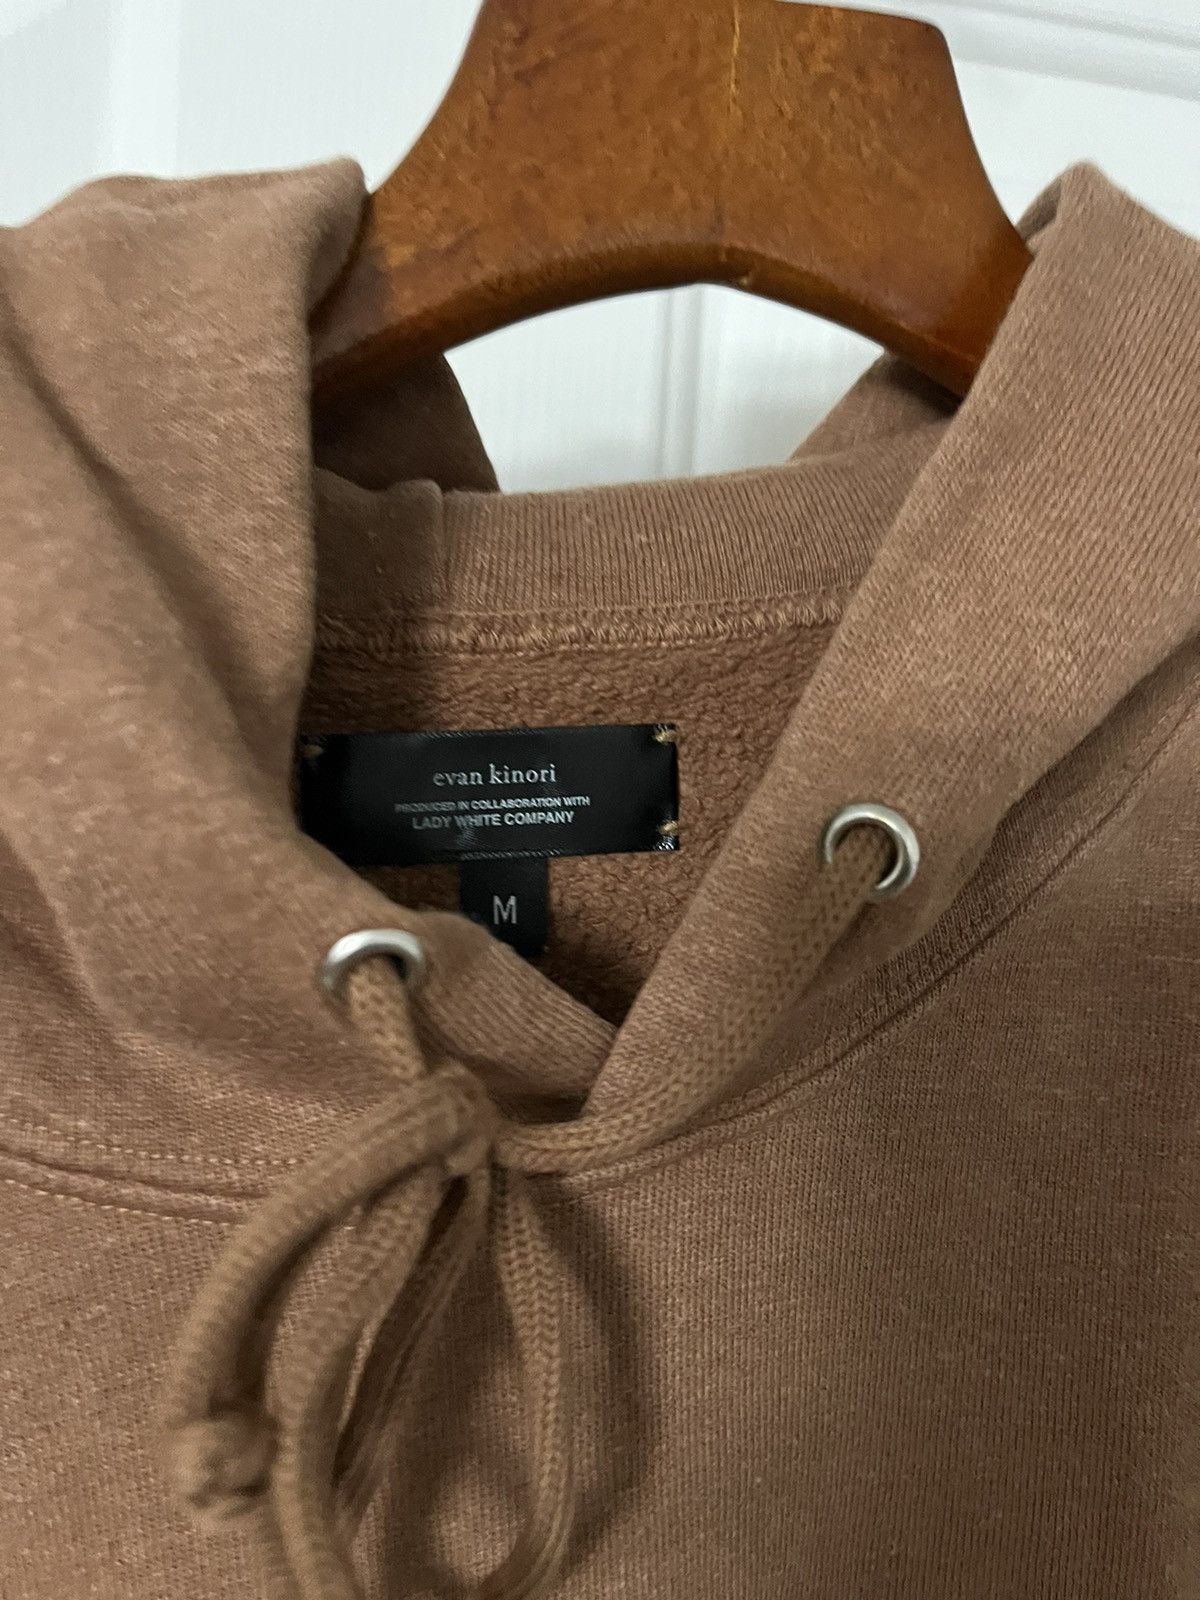 Evan Kinori Hooded Sweatshirt - Hemp/Organic Cotton Fleece Size US M / EU 48-50 / 2 - 2 Preview